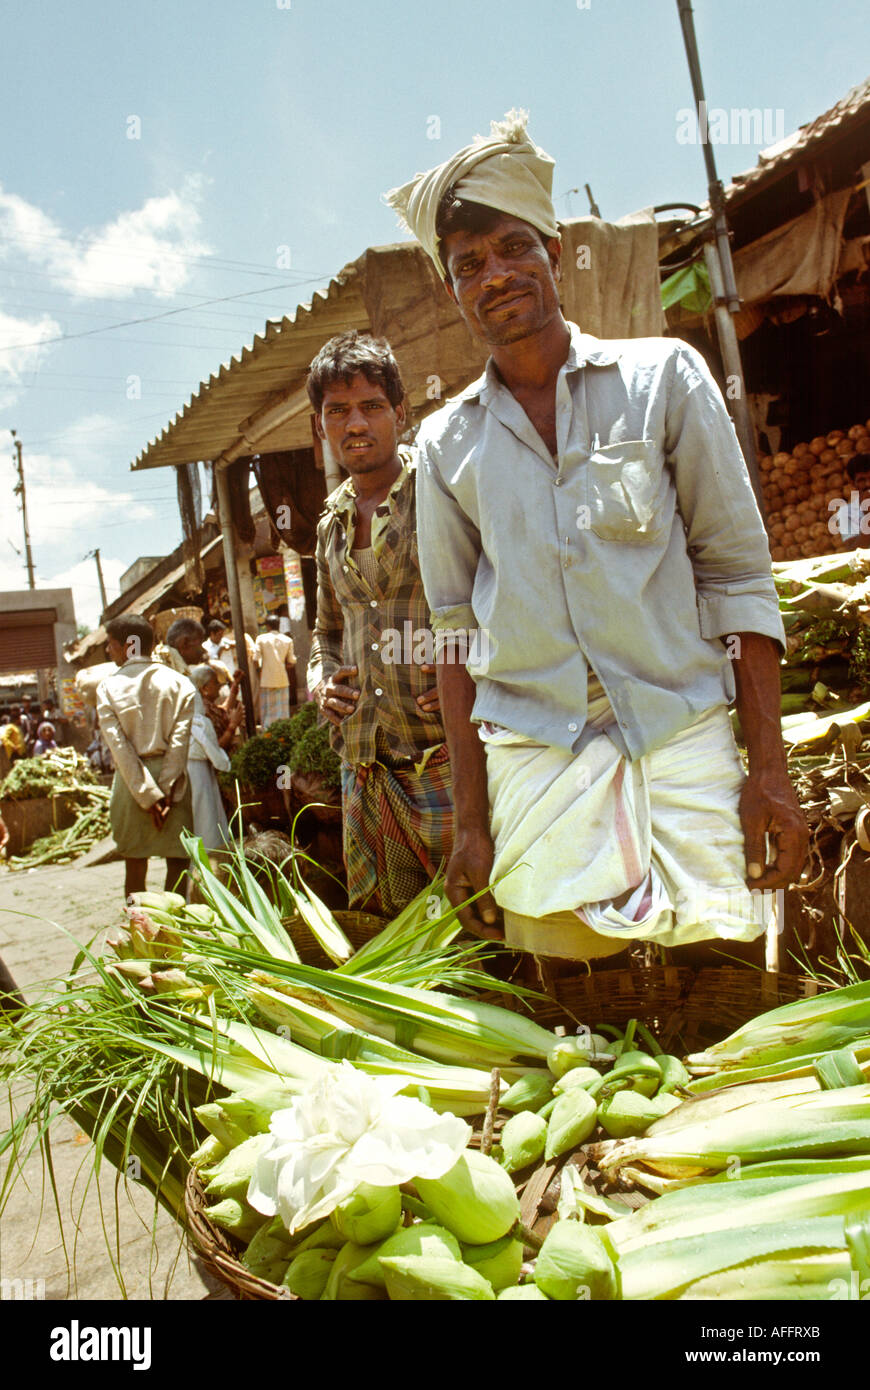 Indien Karnataka Mysore Devarjala Markt Seerose Verkäufer Stockfoto